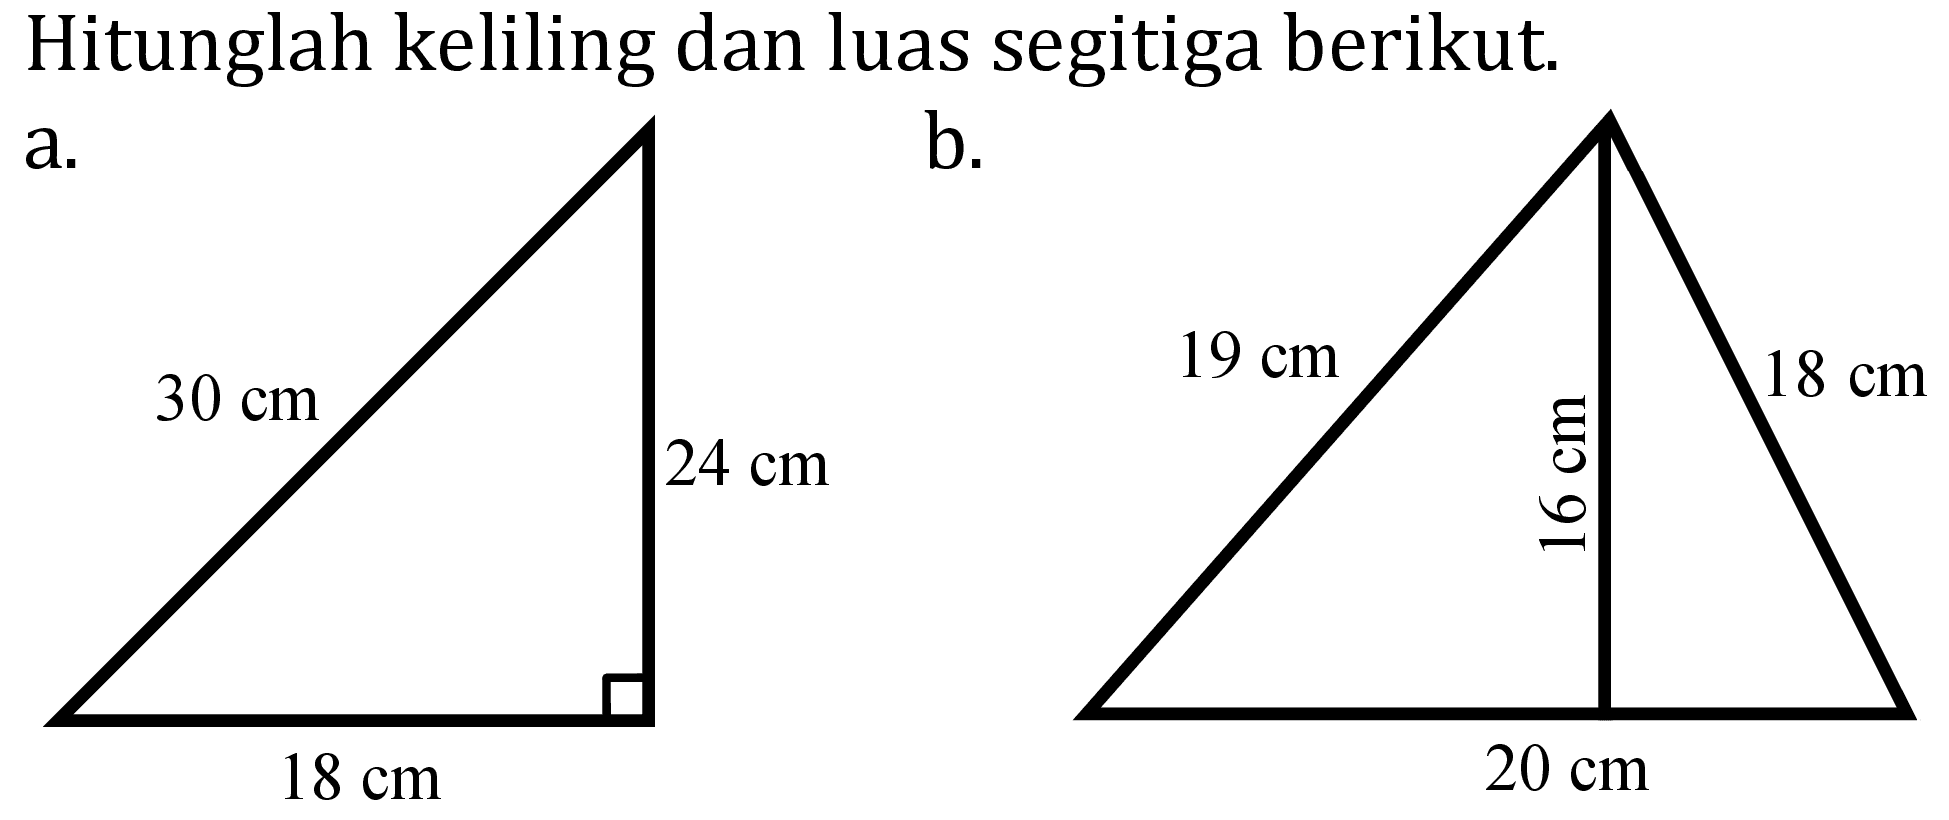 Hitunglah keliling dan luas segitiga berikut. a. 30 cm 24 cm 18 cm b. 19 cm 16 cm 18 cm 20 cm